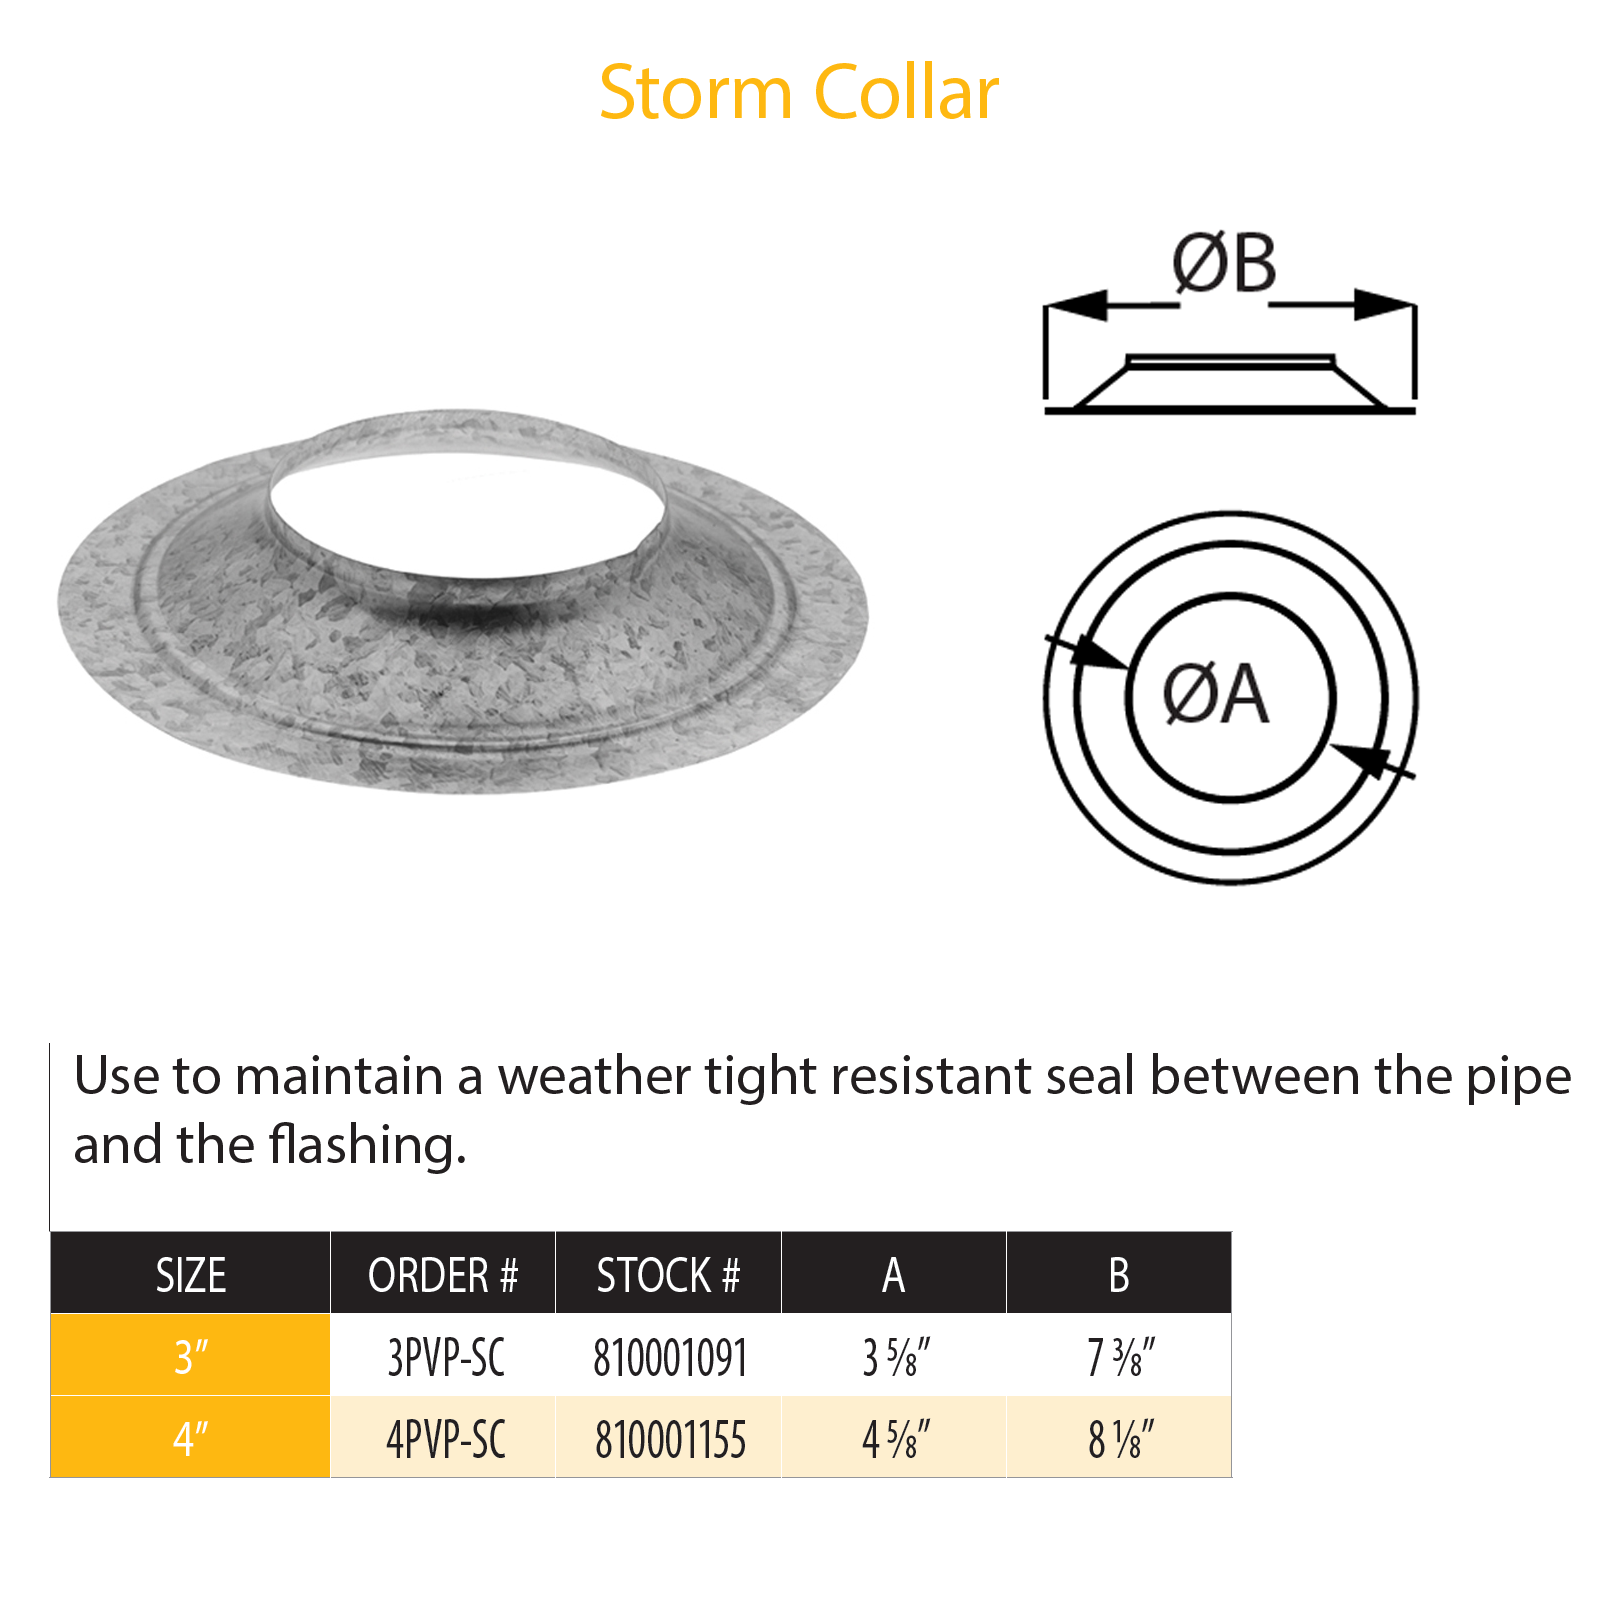 DuraVent Pellet Vent Pro Storm Collar | 3PVP-SC